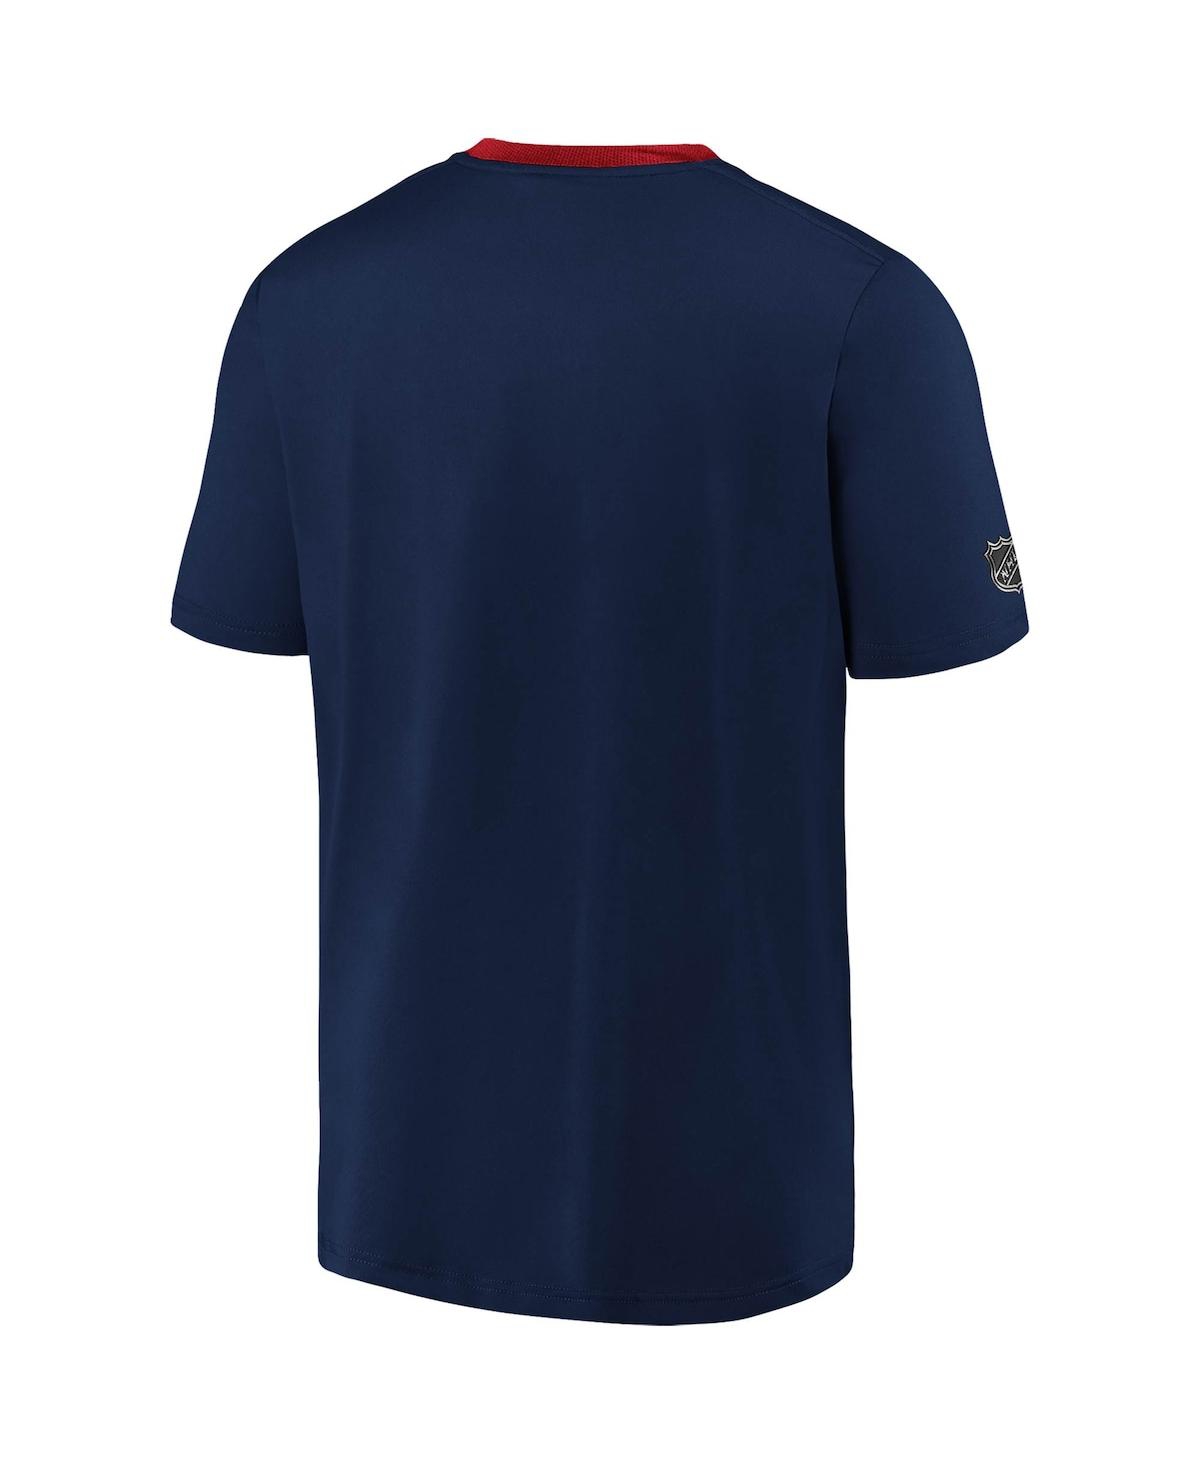 Shop Fanatics Men's  Navy Montreal Canadiens Authentic Pro Locker Room Performance T-shirt